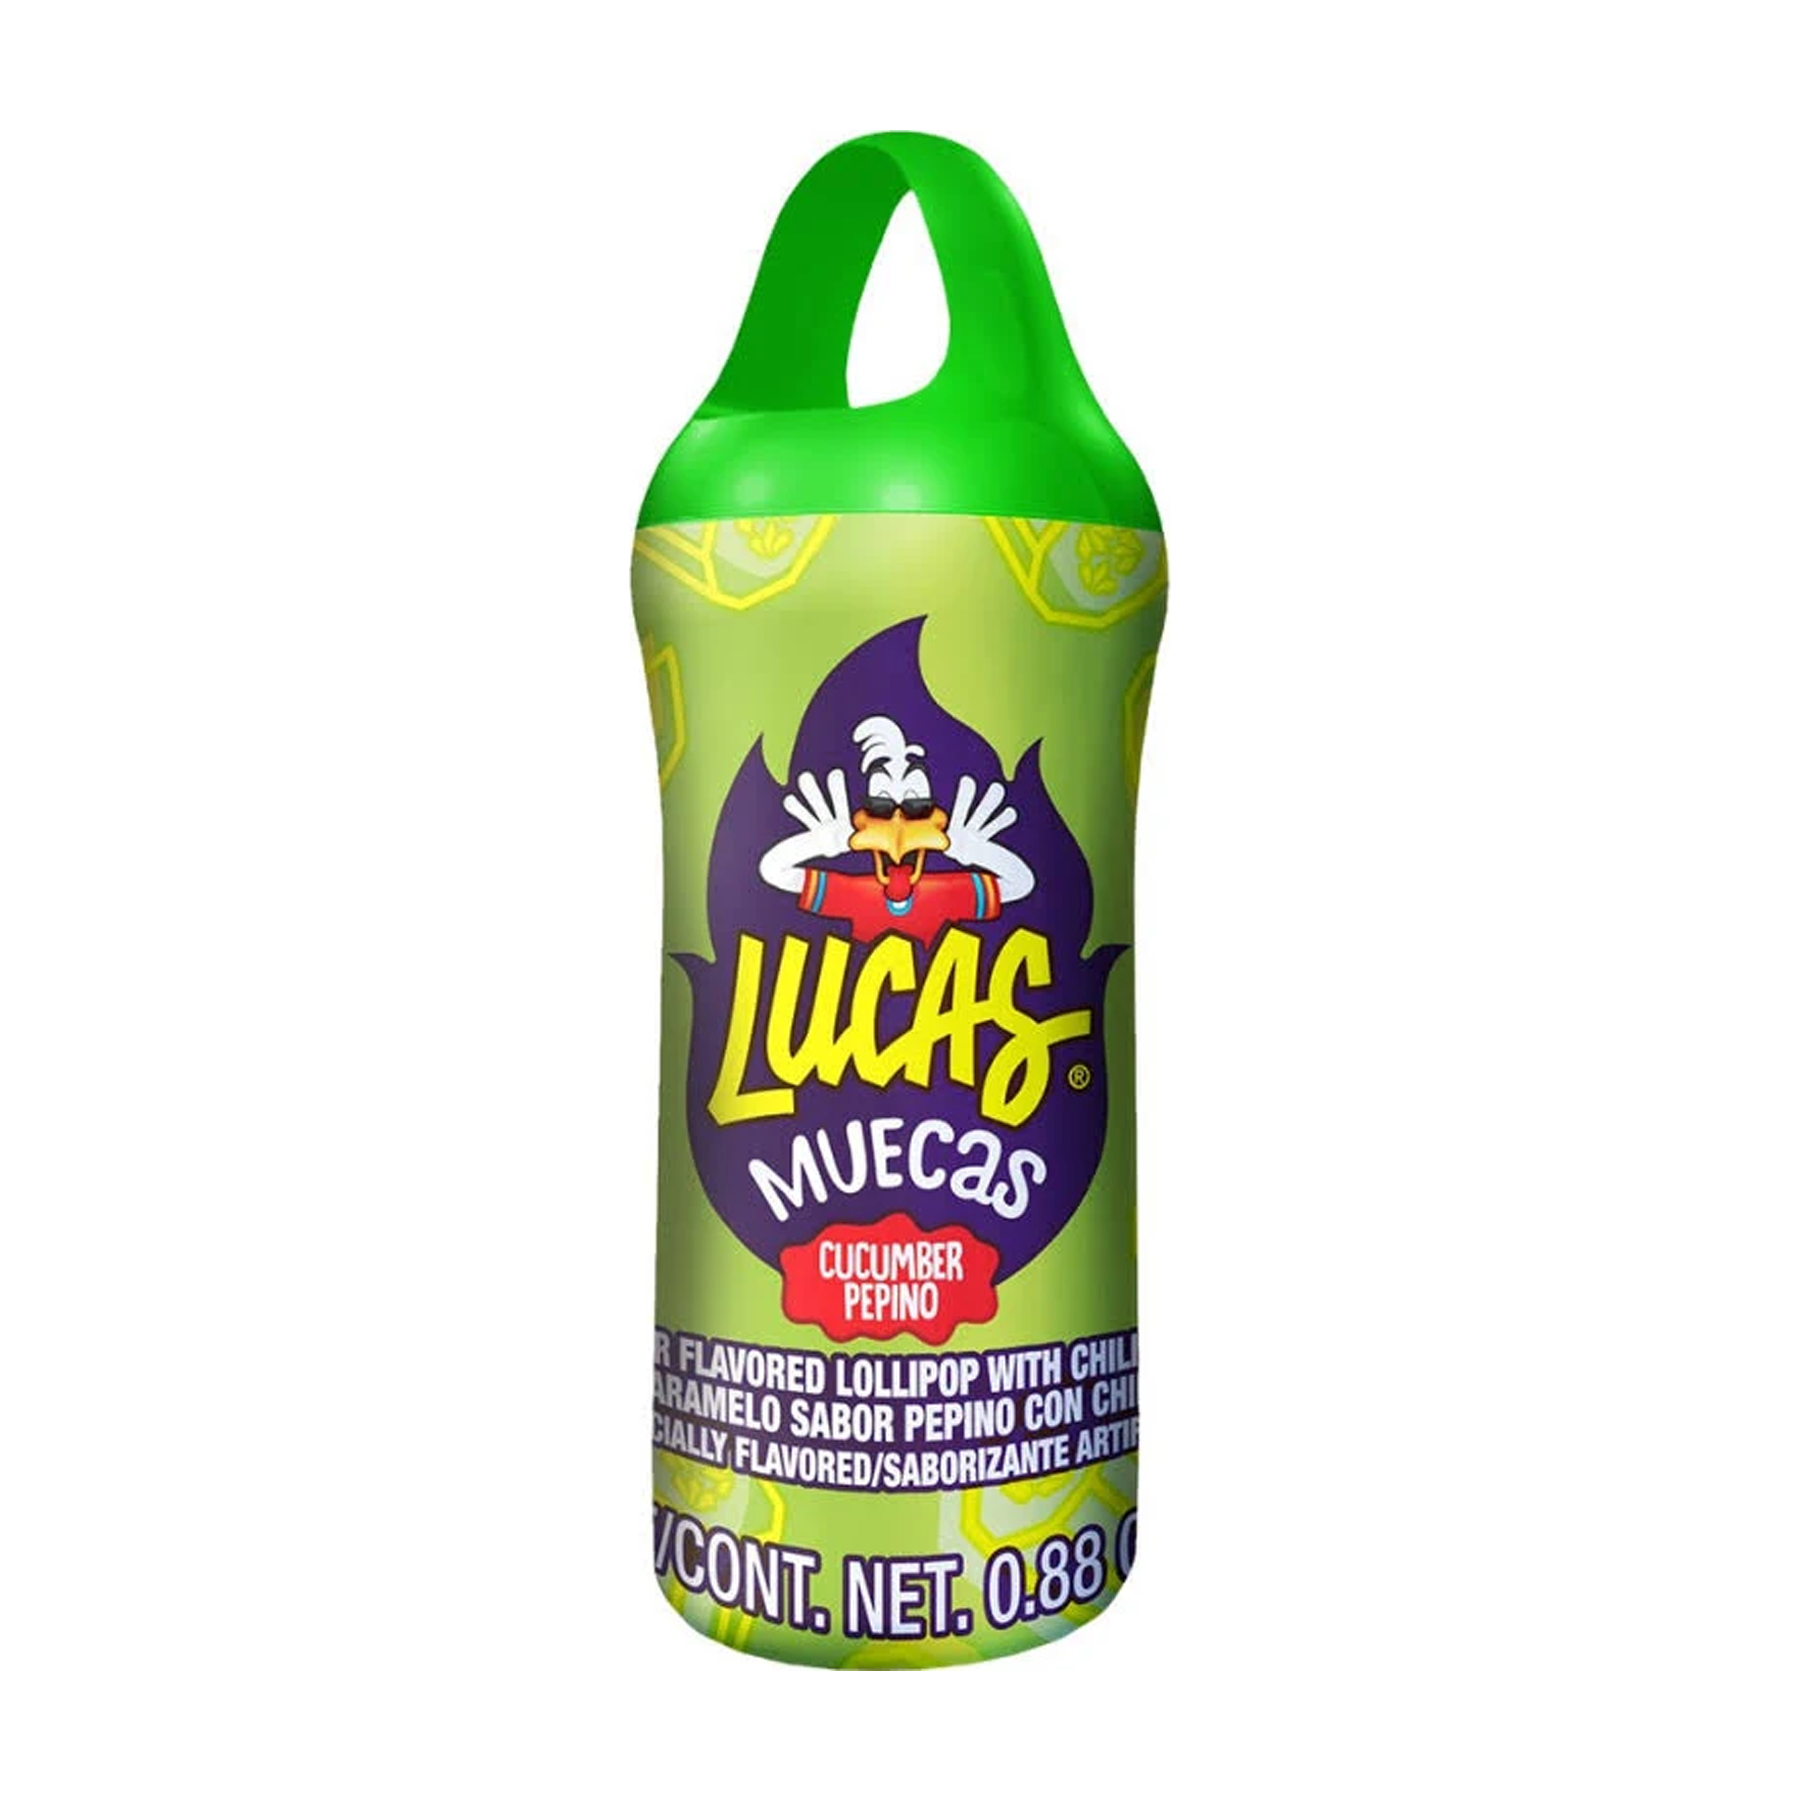 Lucas Muecas Fuego Lollipop Cucumber Pepino (0.88Oz)